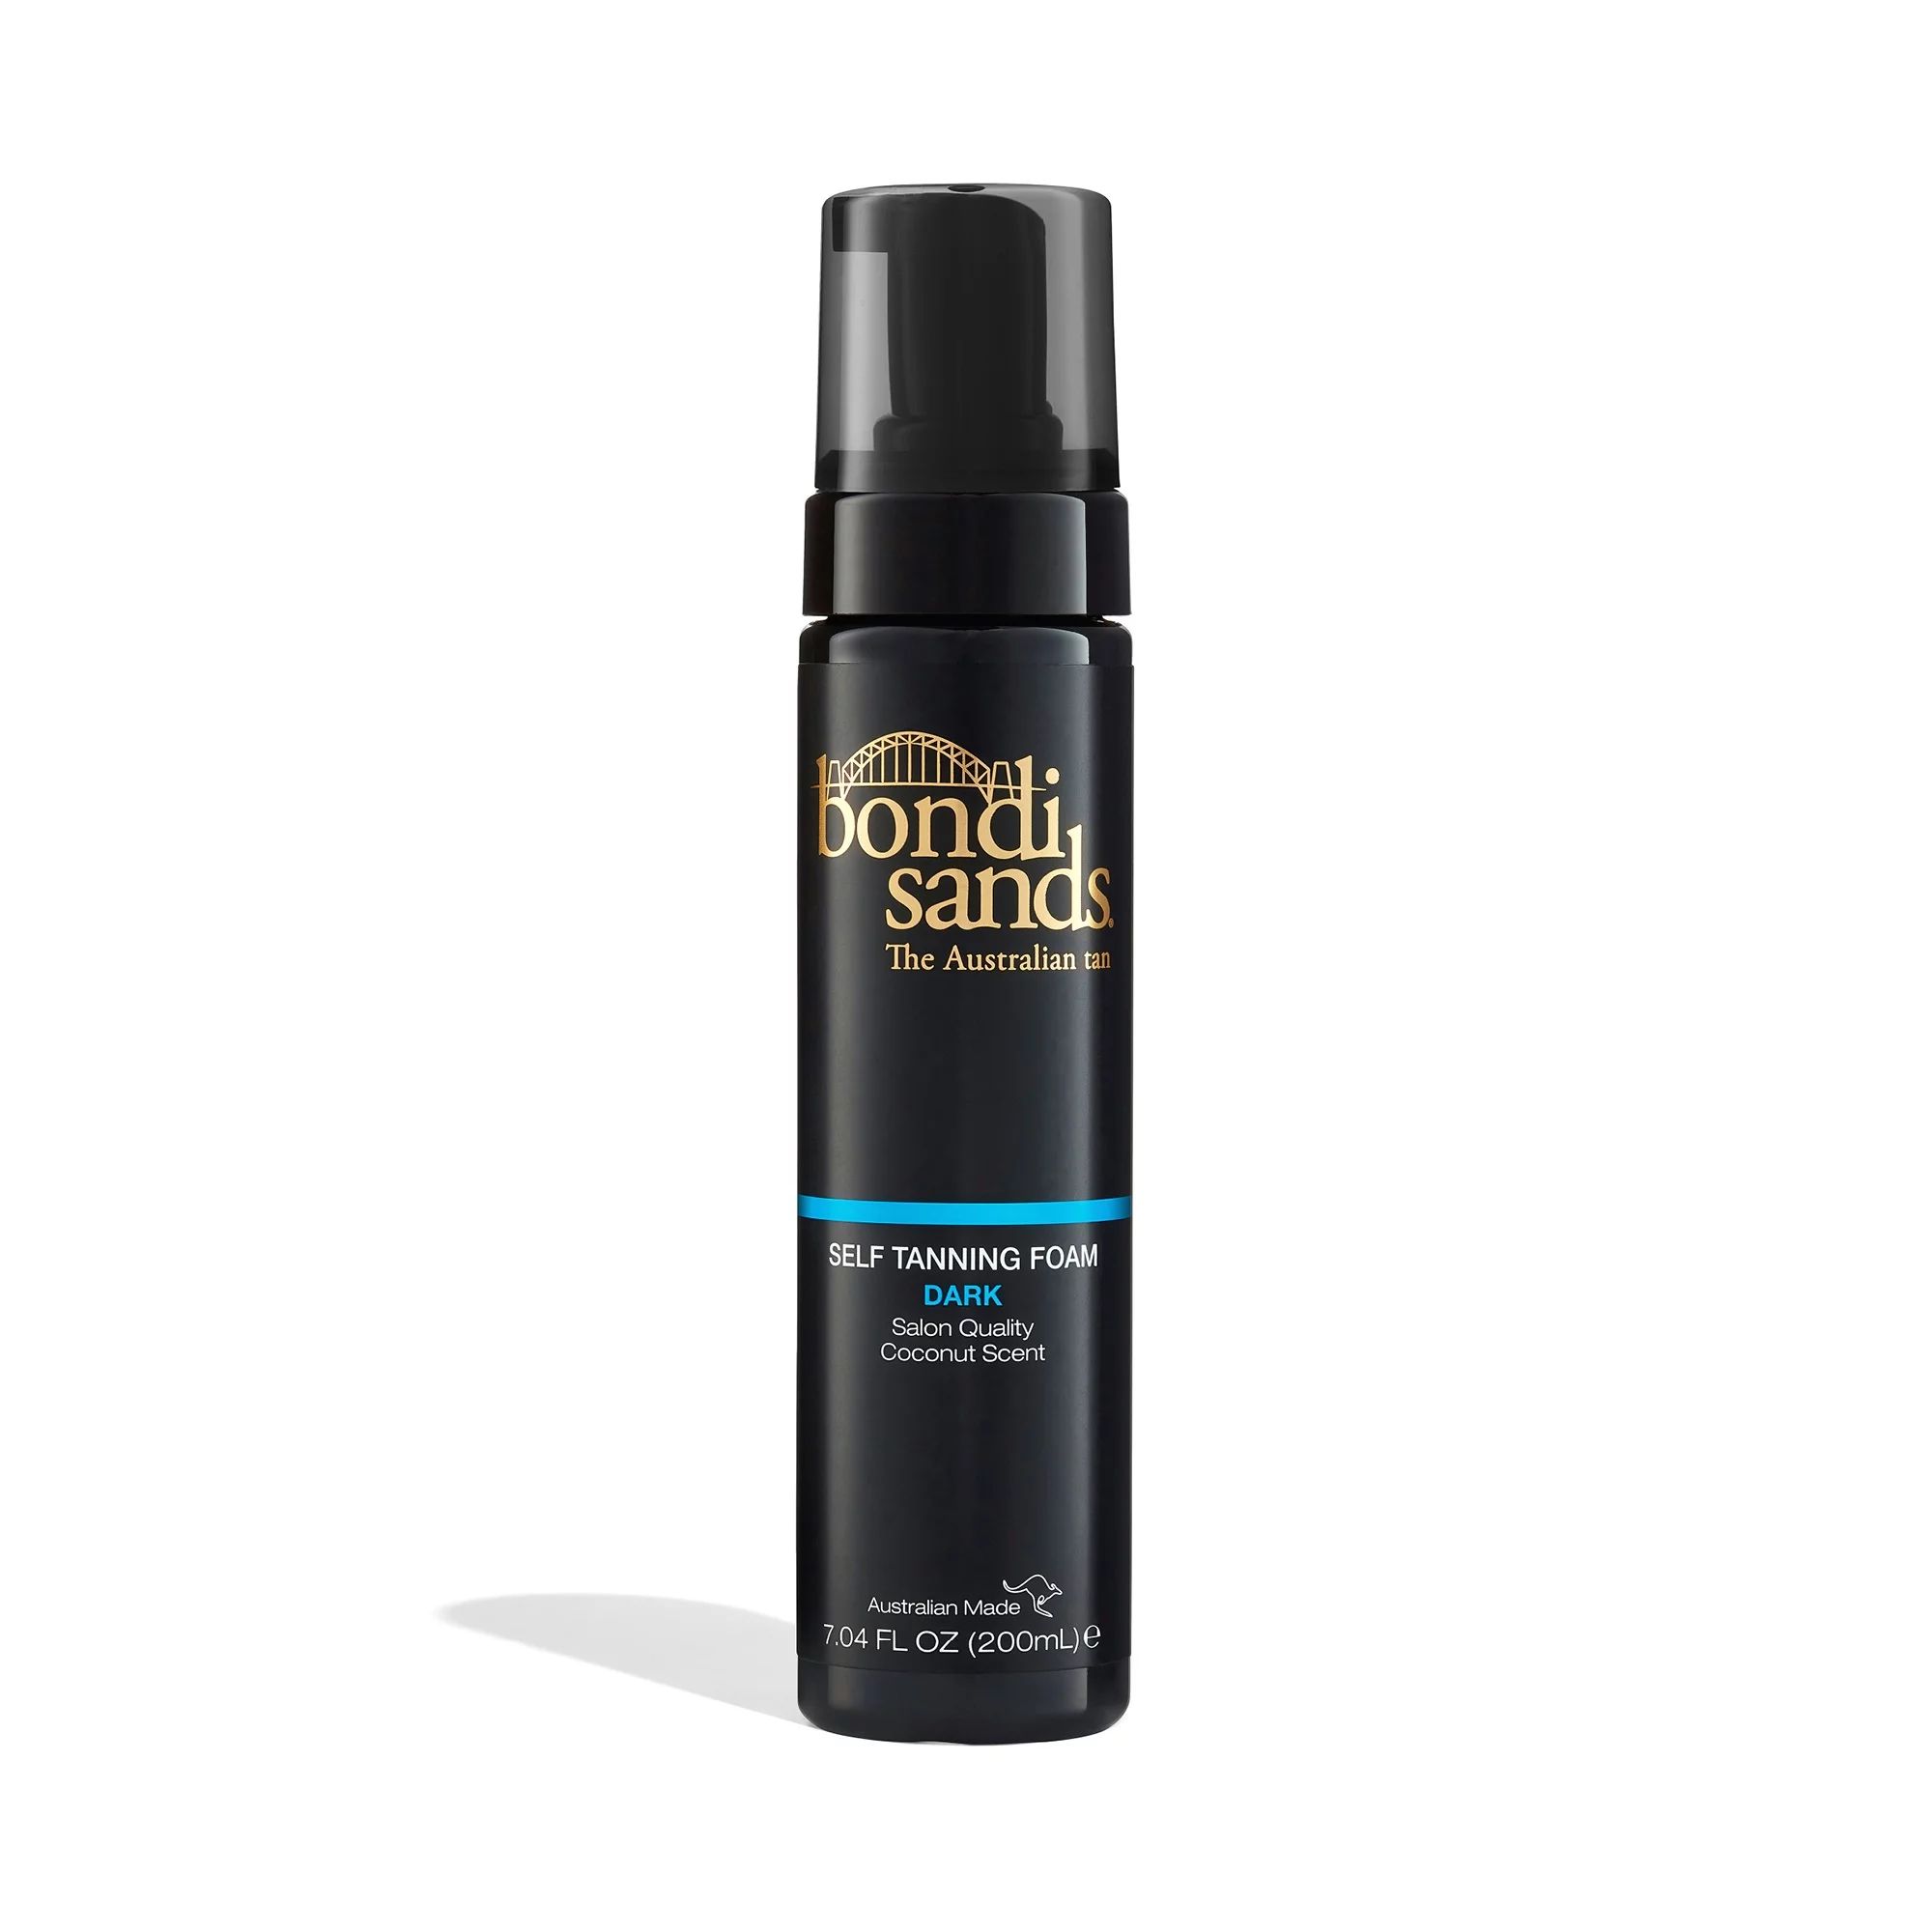 Bondi Sands Self Tanning Foam Dark for Face and Body 7.04 oz. - Walmart.com | Walmart (US)